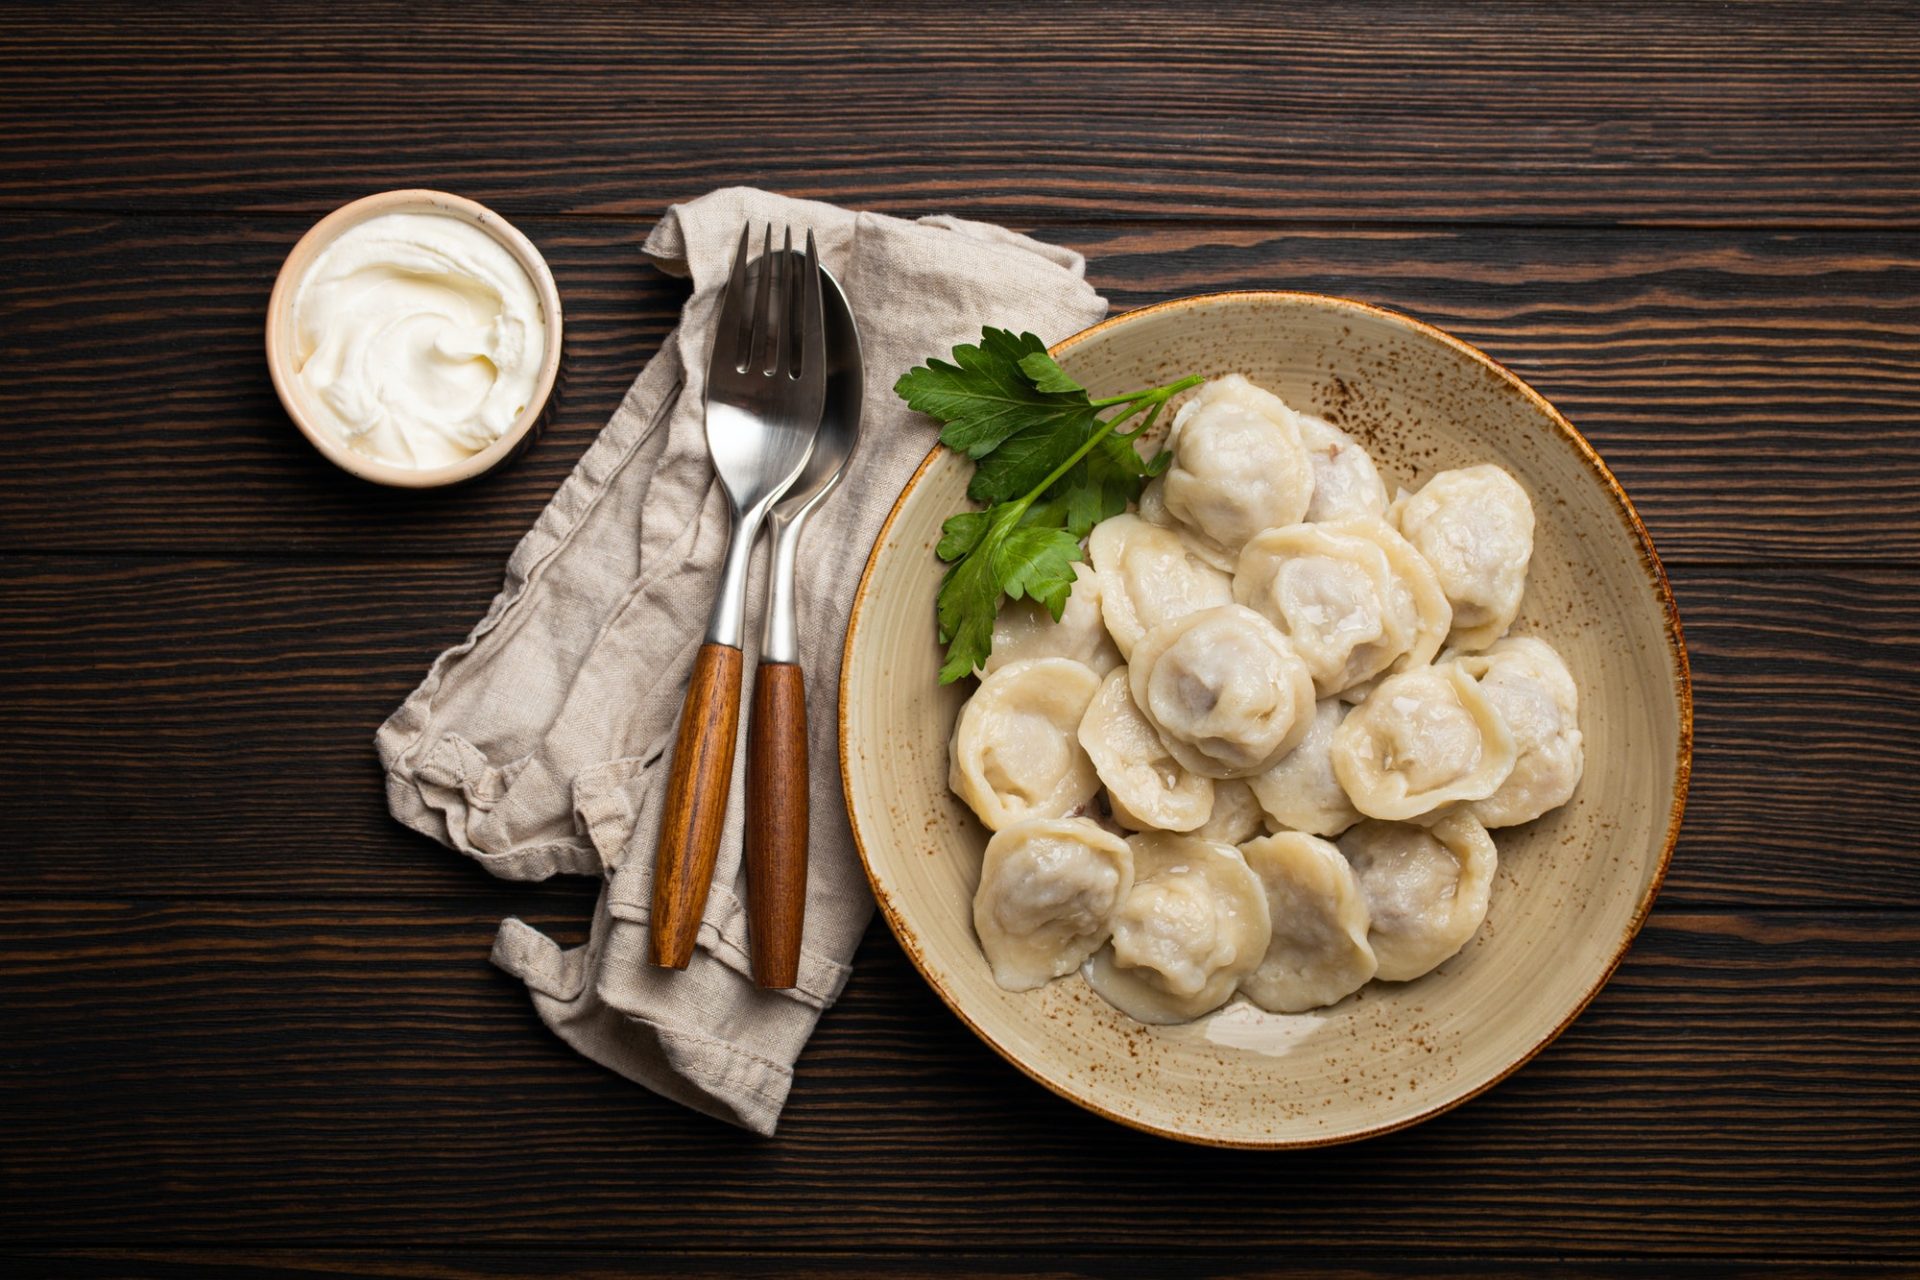 Pelmeni, traditional dish of Russian cuisine, boiled dumplings with minced meat